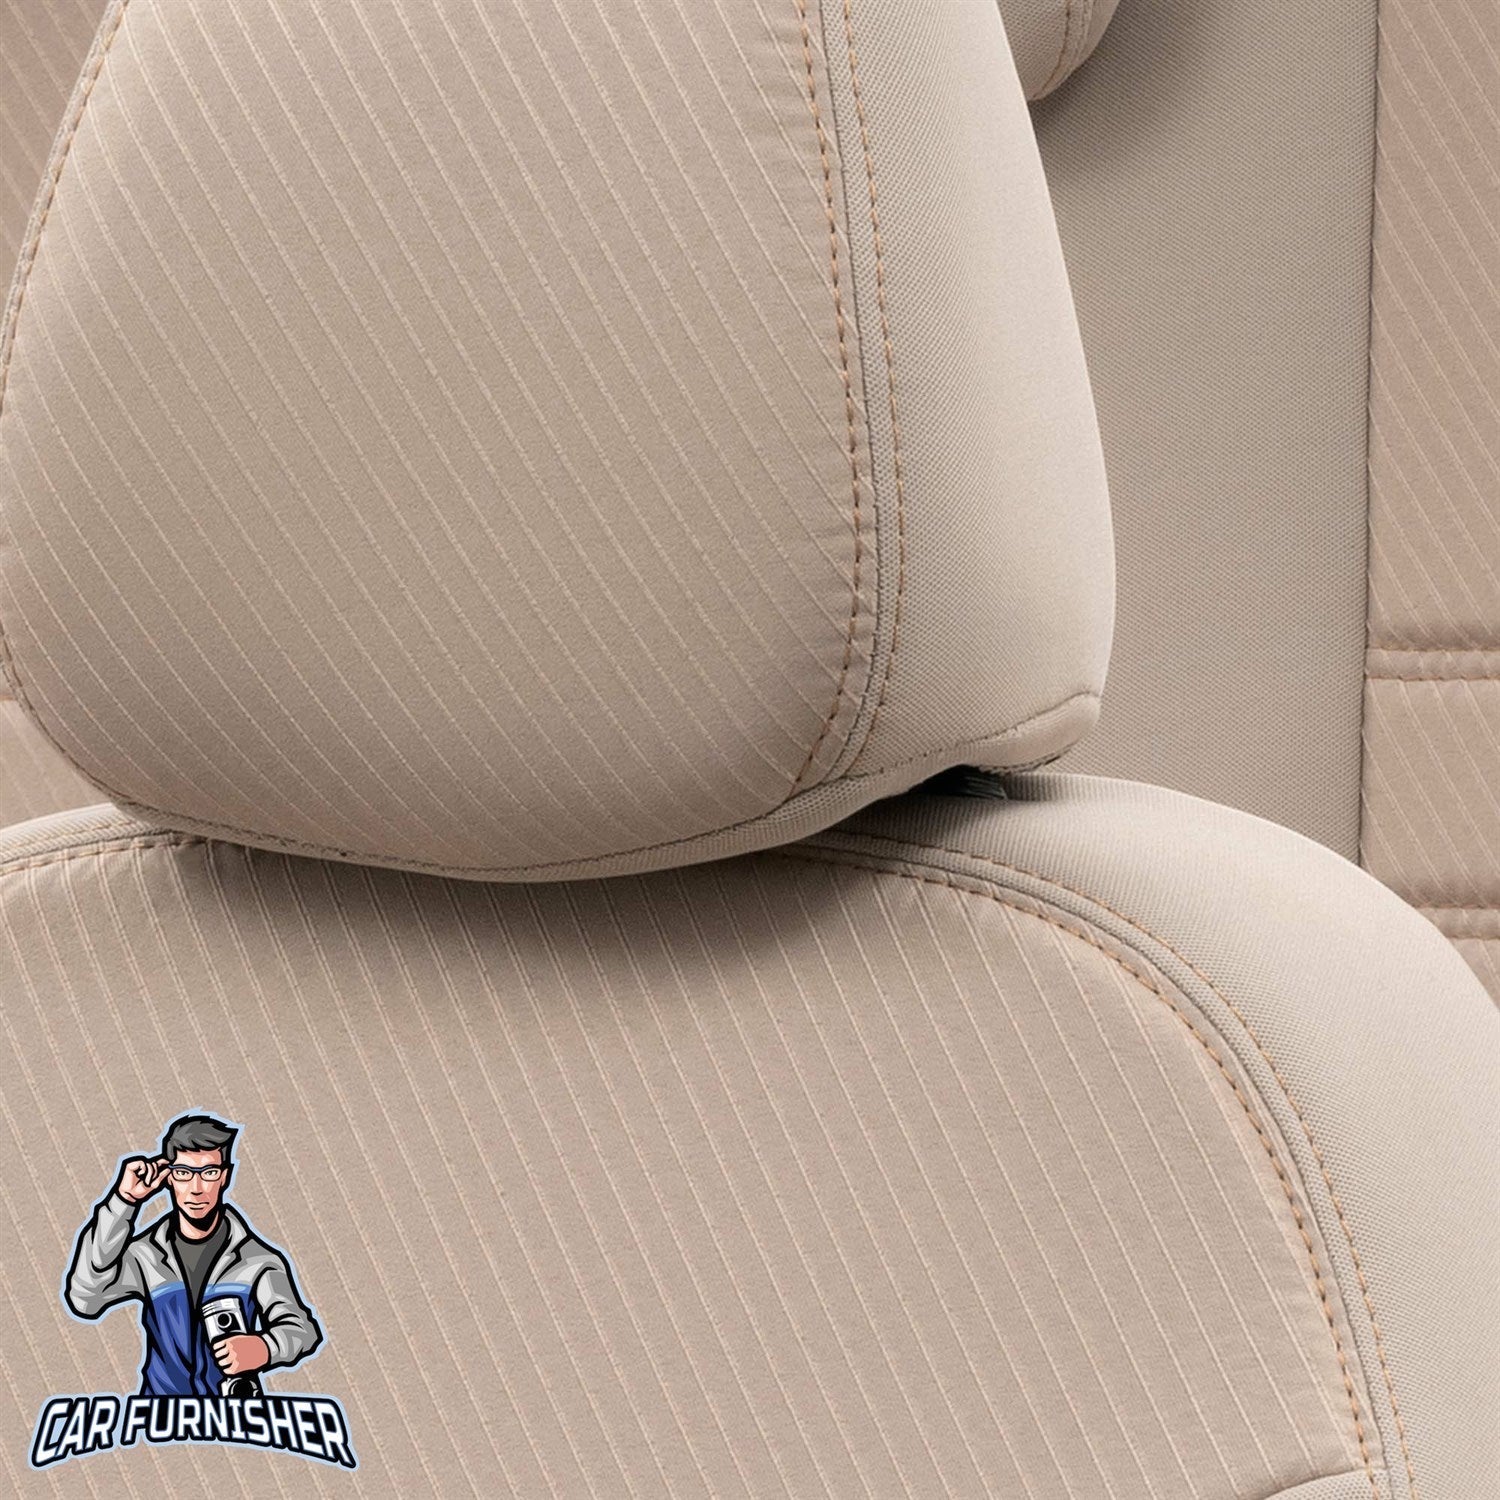 Bmw 5 Series Seat Cover Original Jacquard Design Dark Beige Jacquard Fabric